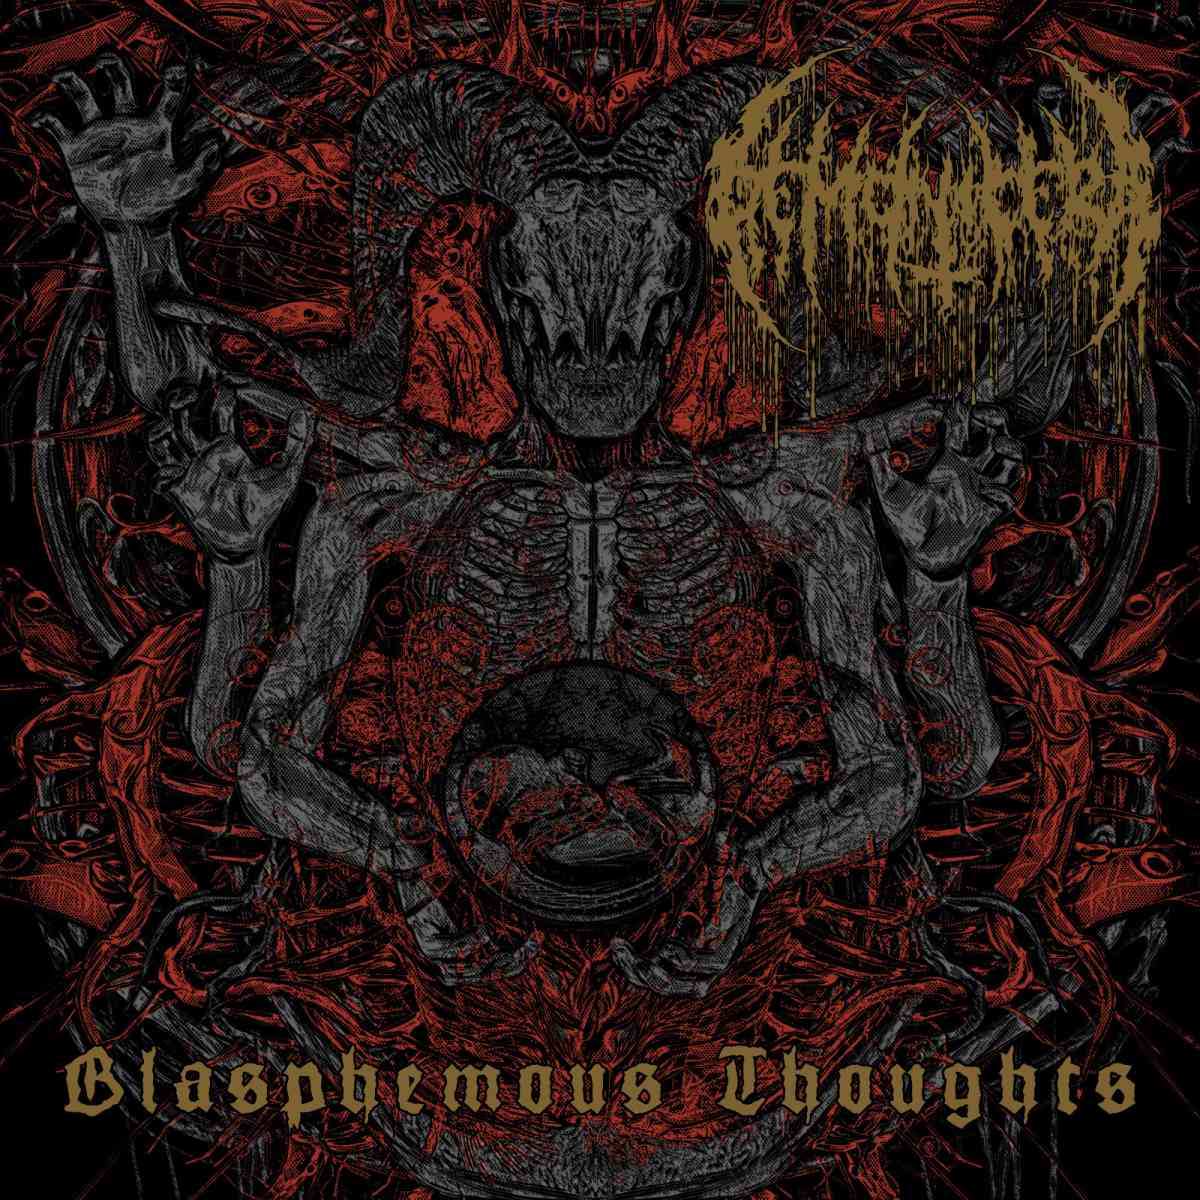 DEMONICERA - Blasphemous Thoughts - album cover